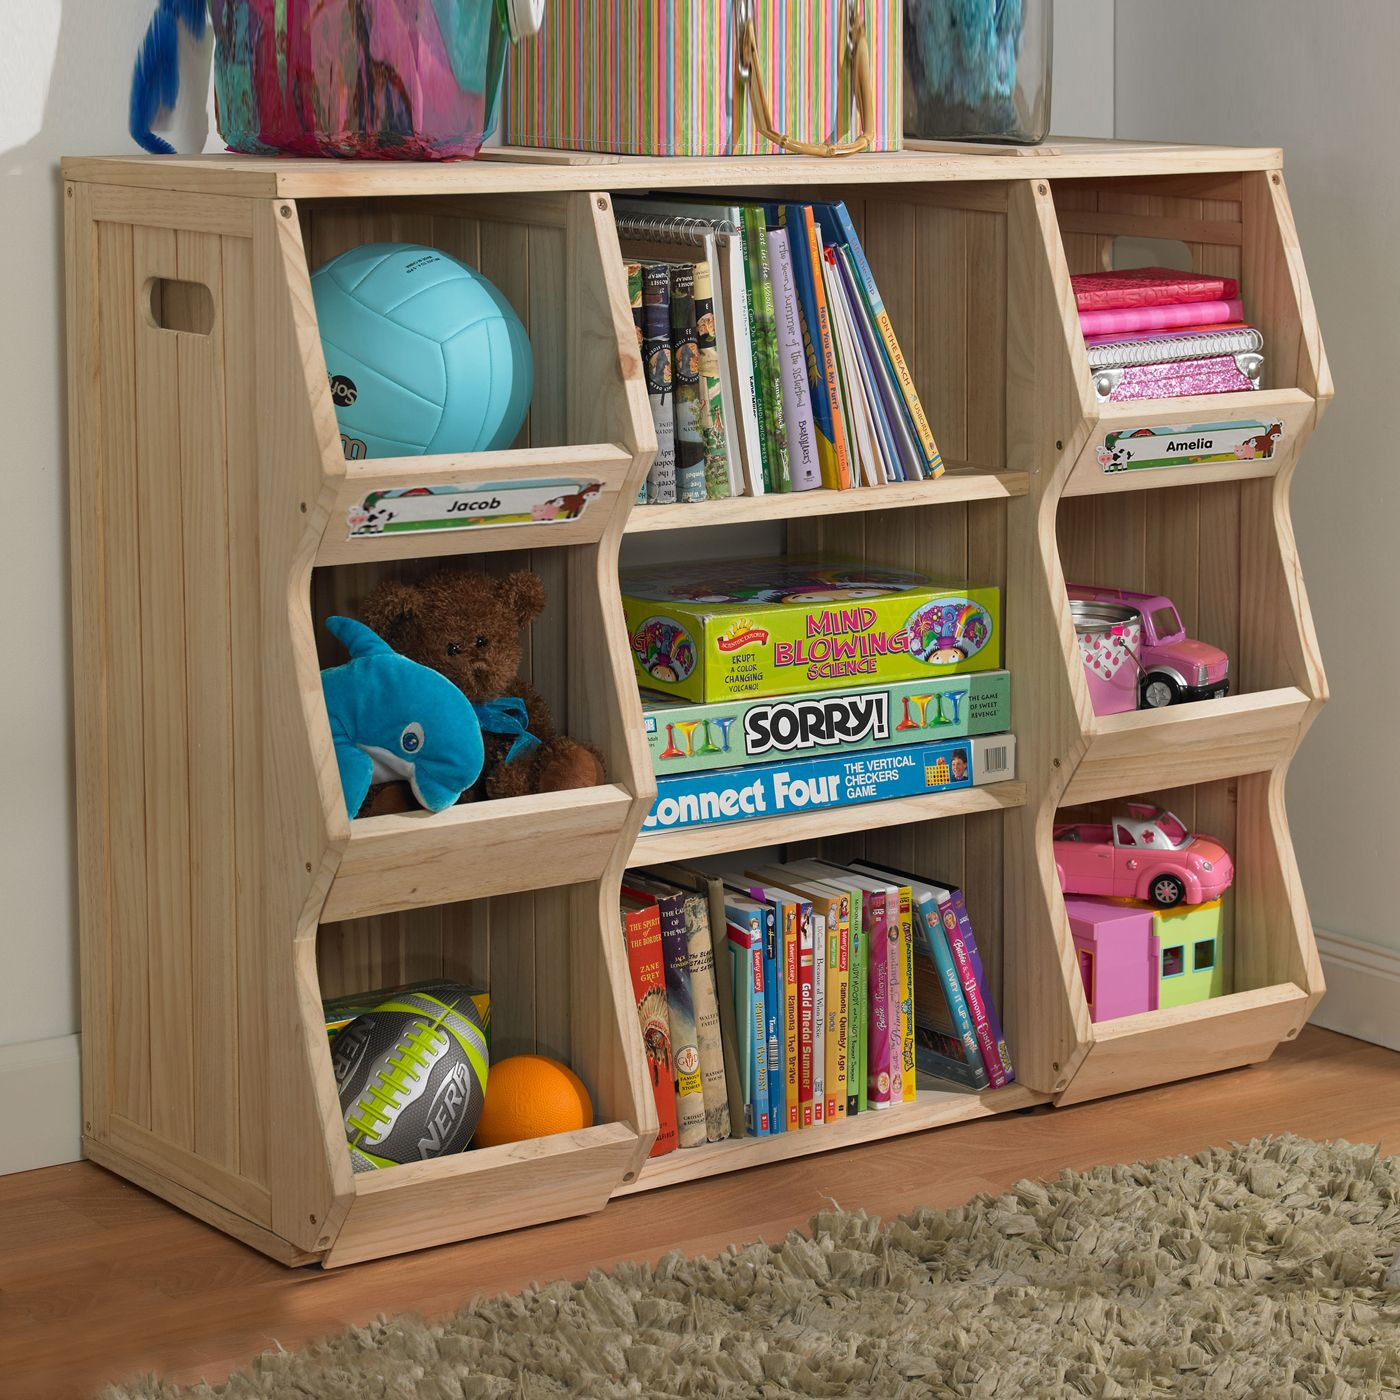 Storage Shelves For Kids Room
 Merry Products SLF Children s Bookshelf Cubby